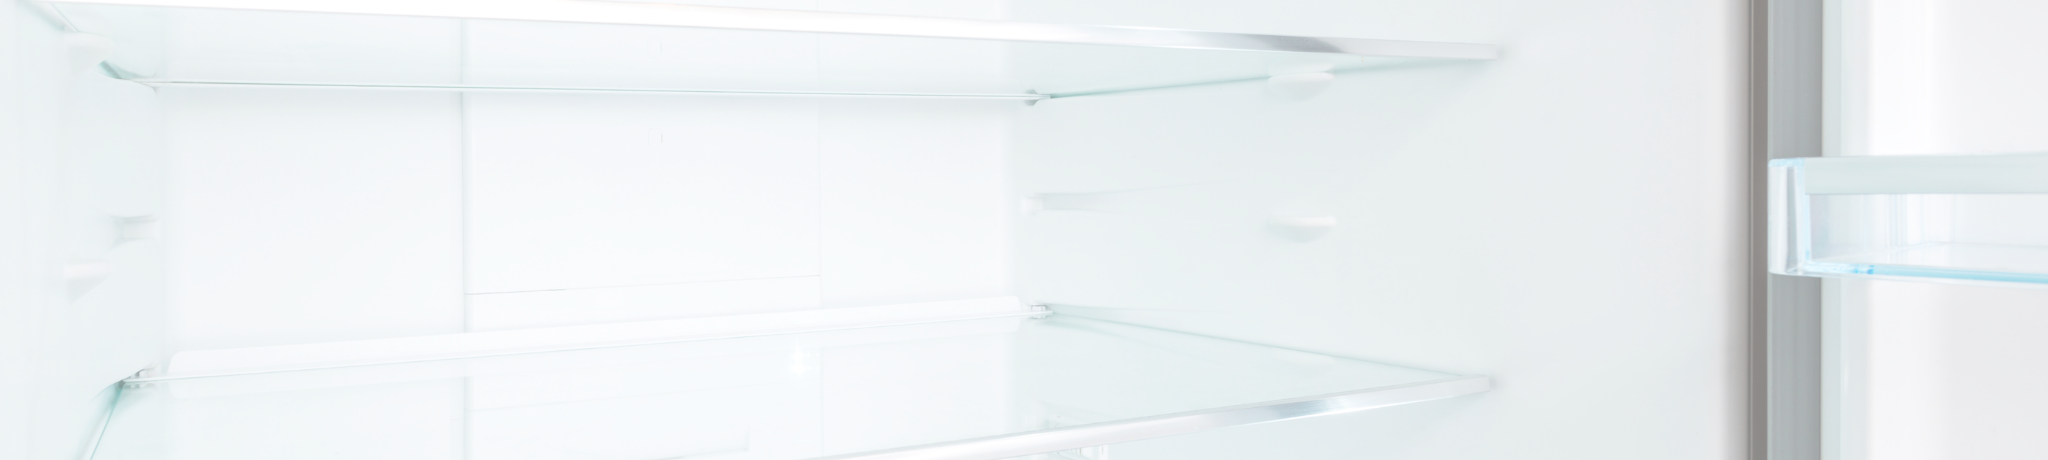 Kitchen Appliance & Refrigerator Packages